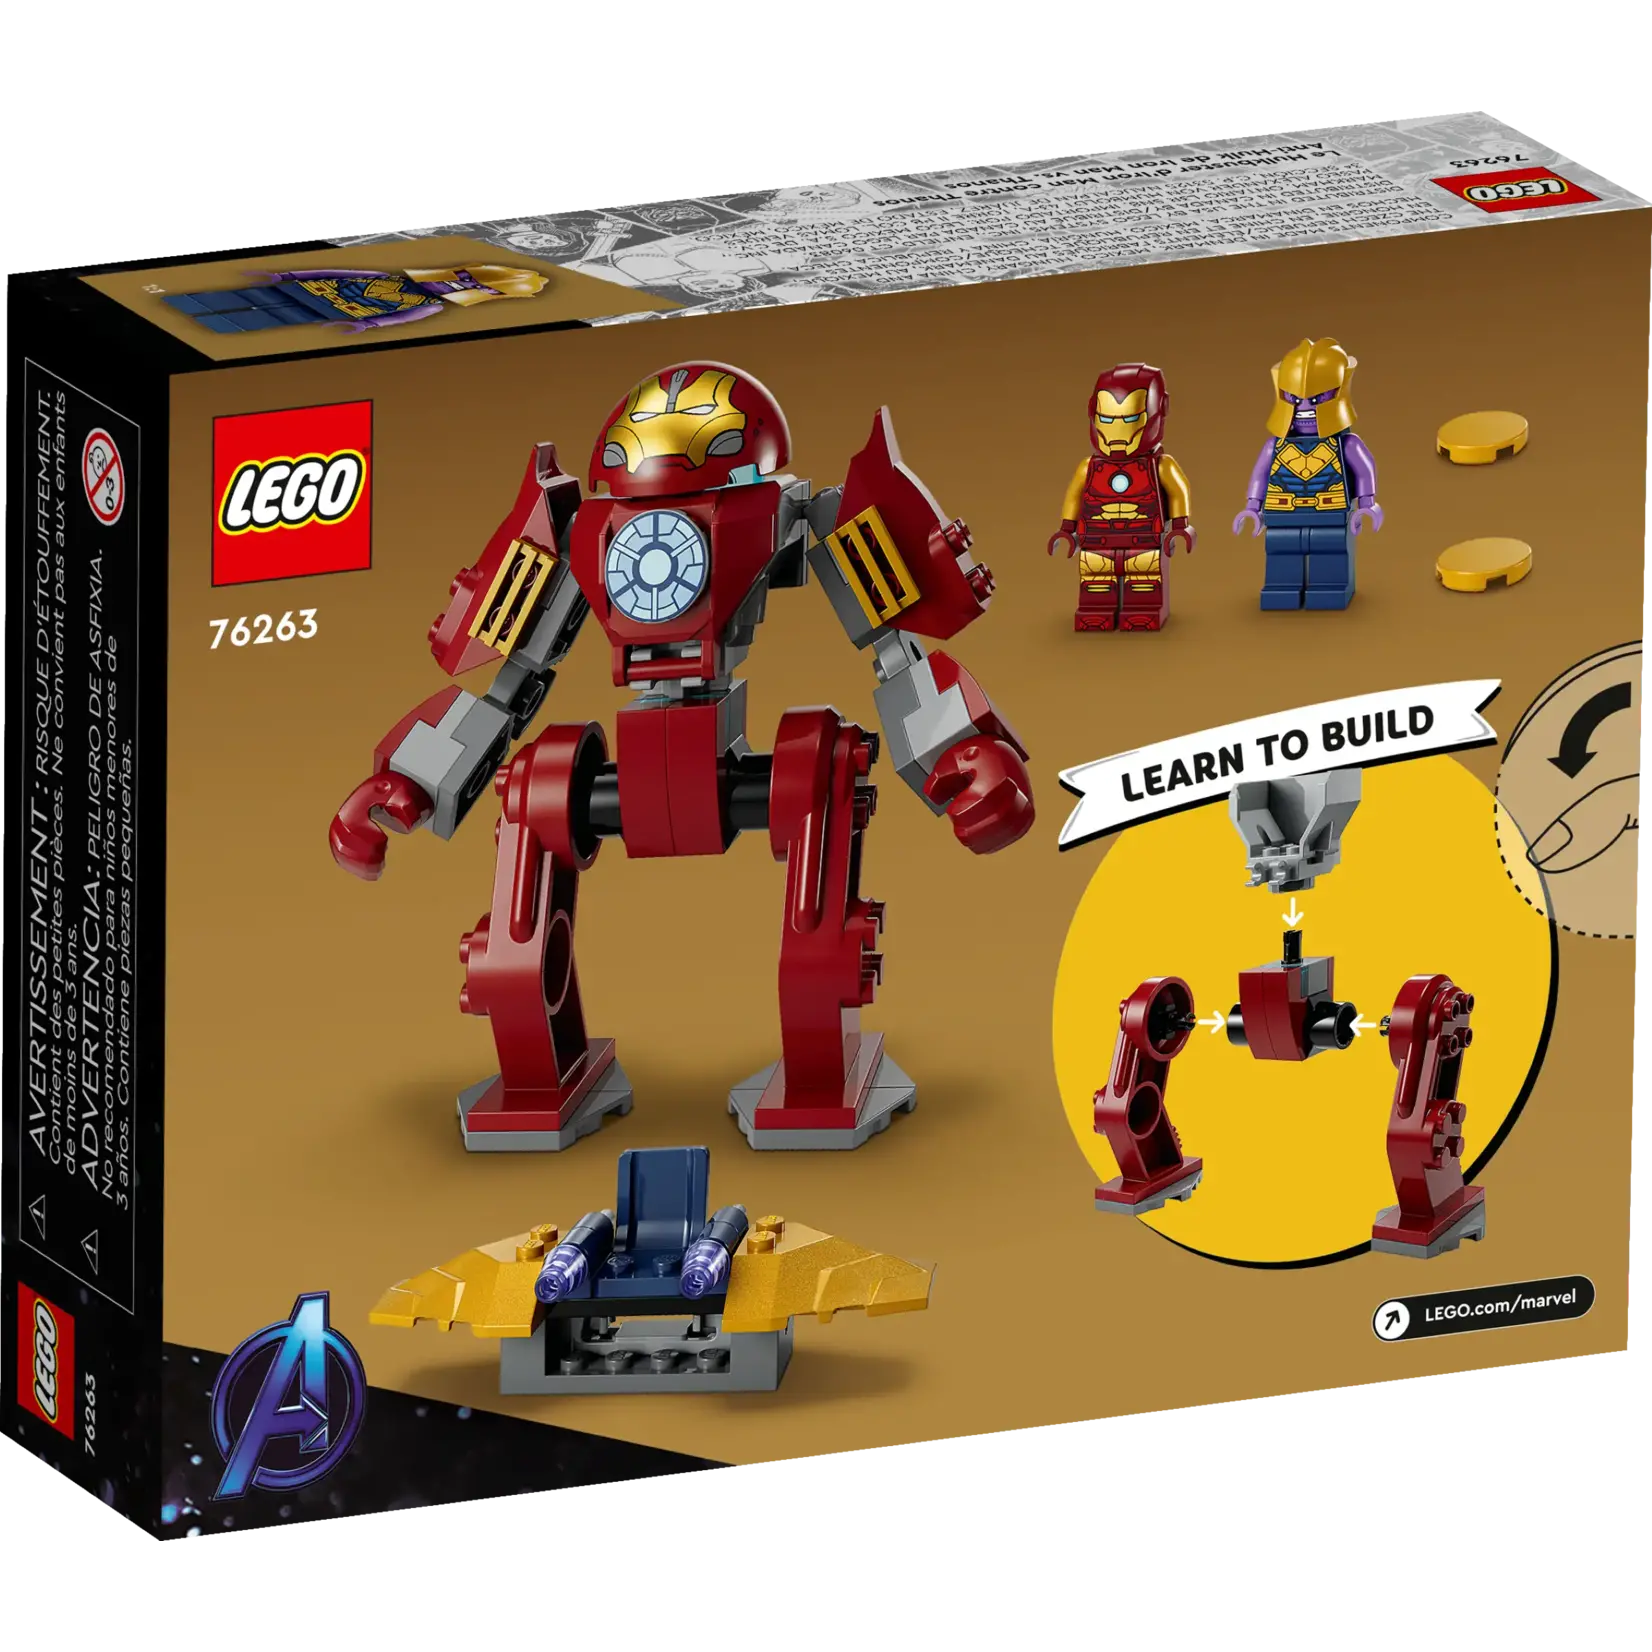 LEGO 76263 Iron Man Hulkbuster vs. Thanos